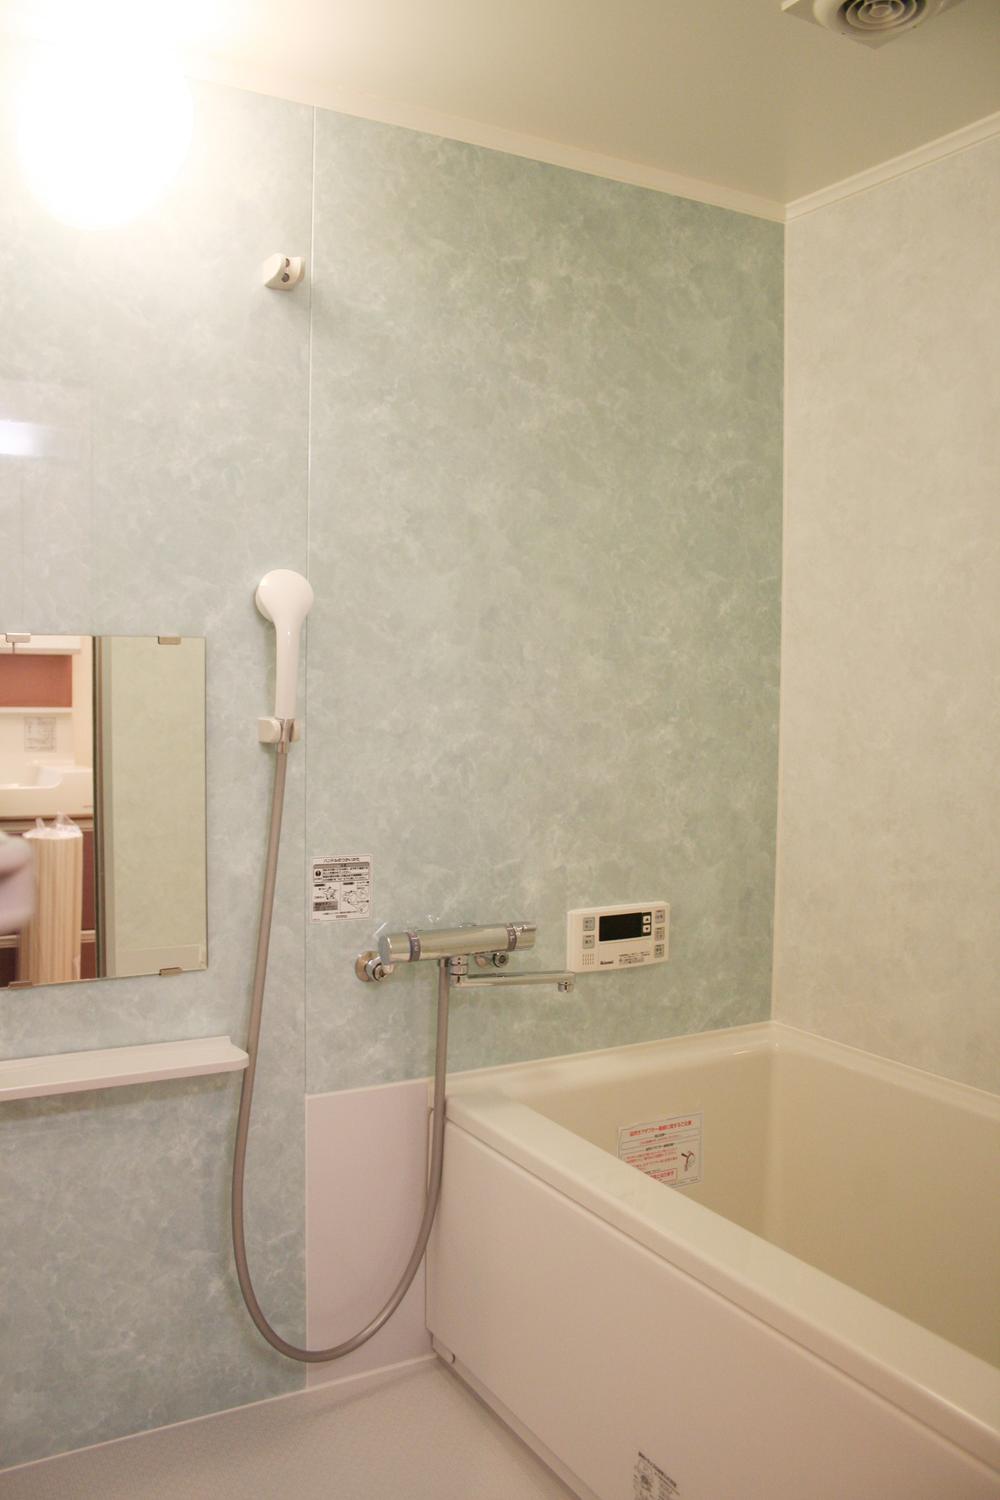 Same specifications photo (bathroom). Bathroom renovation (Reference image)